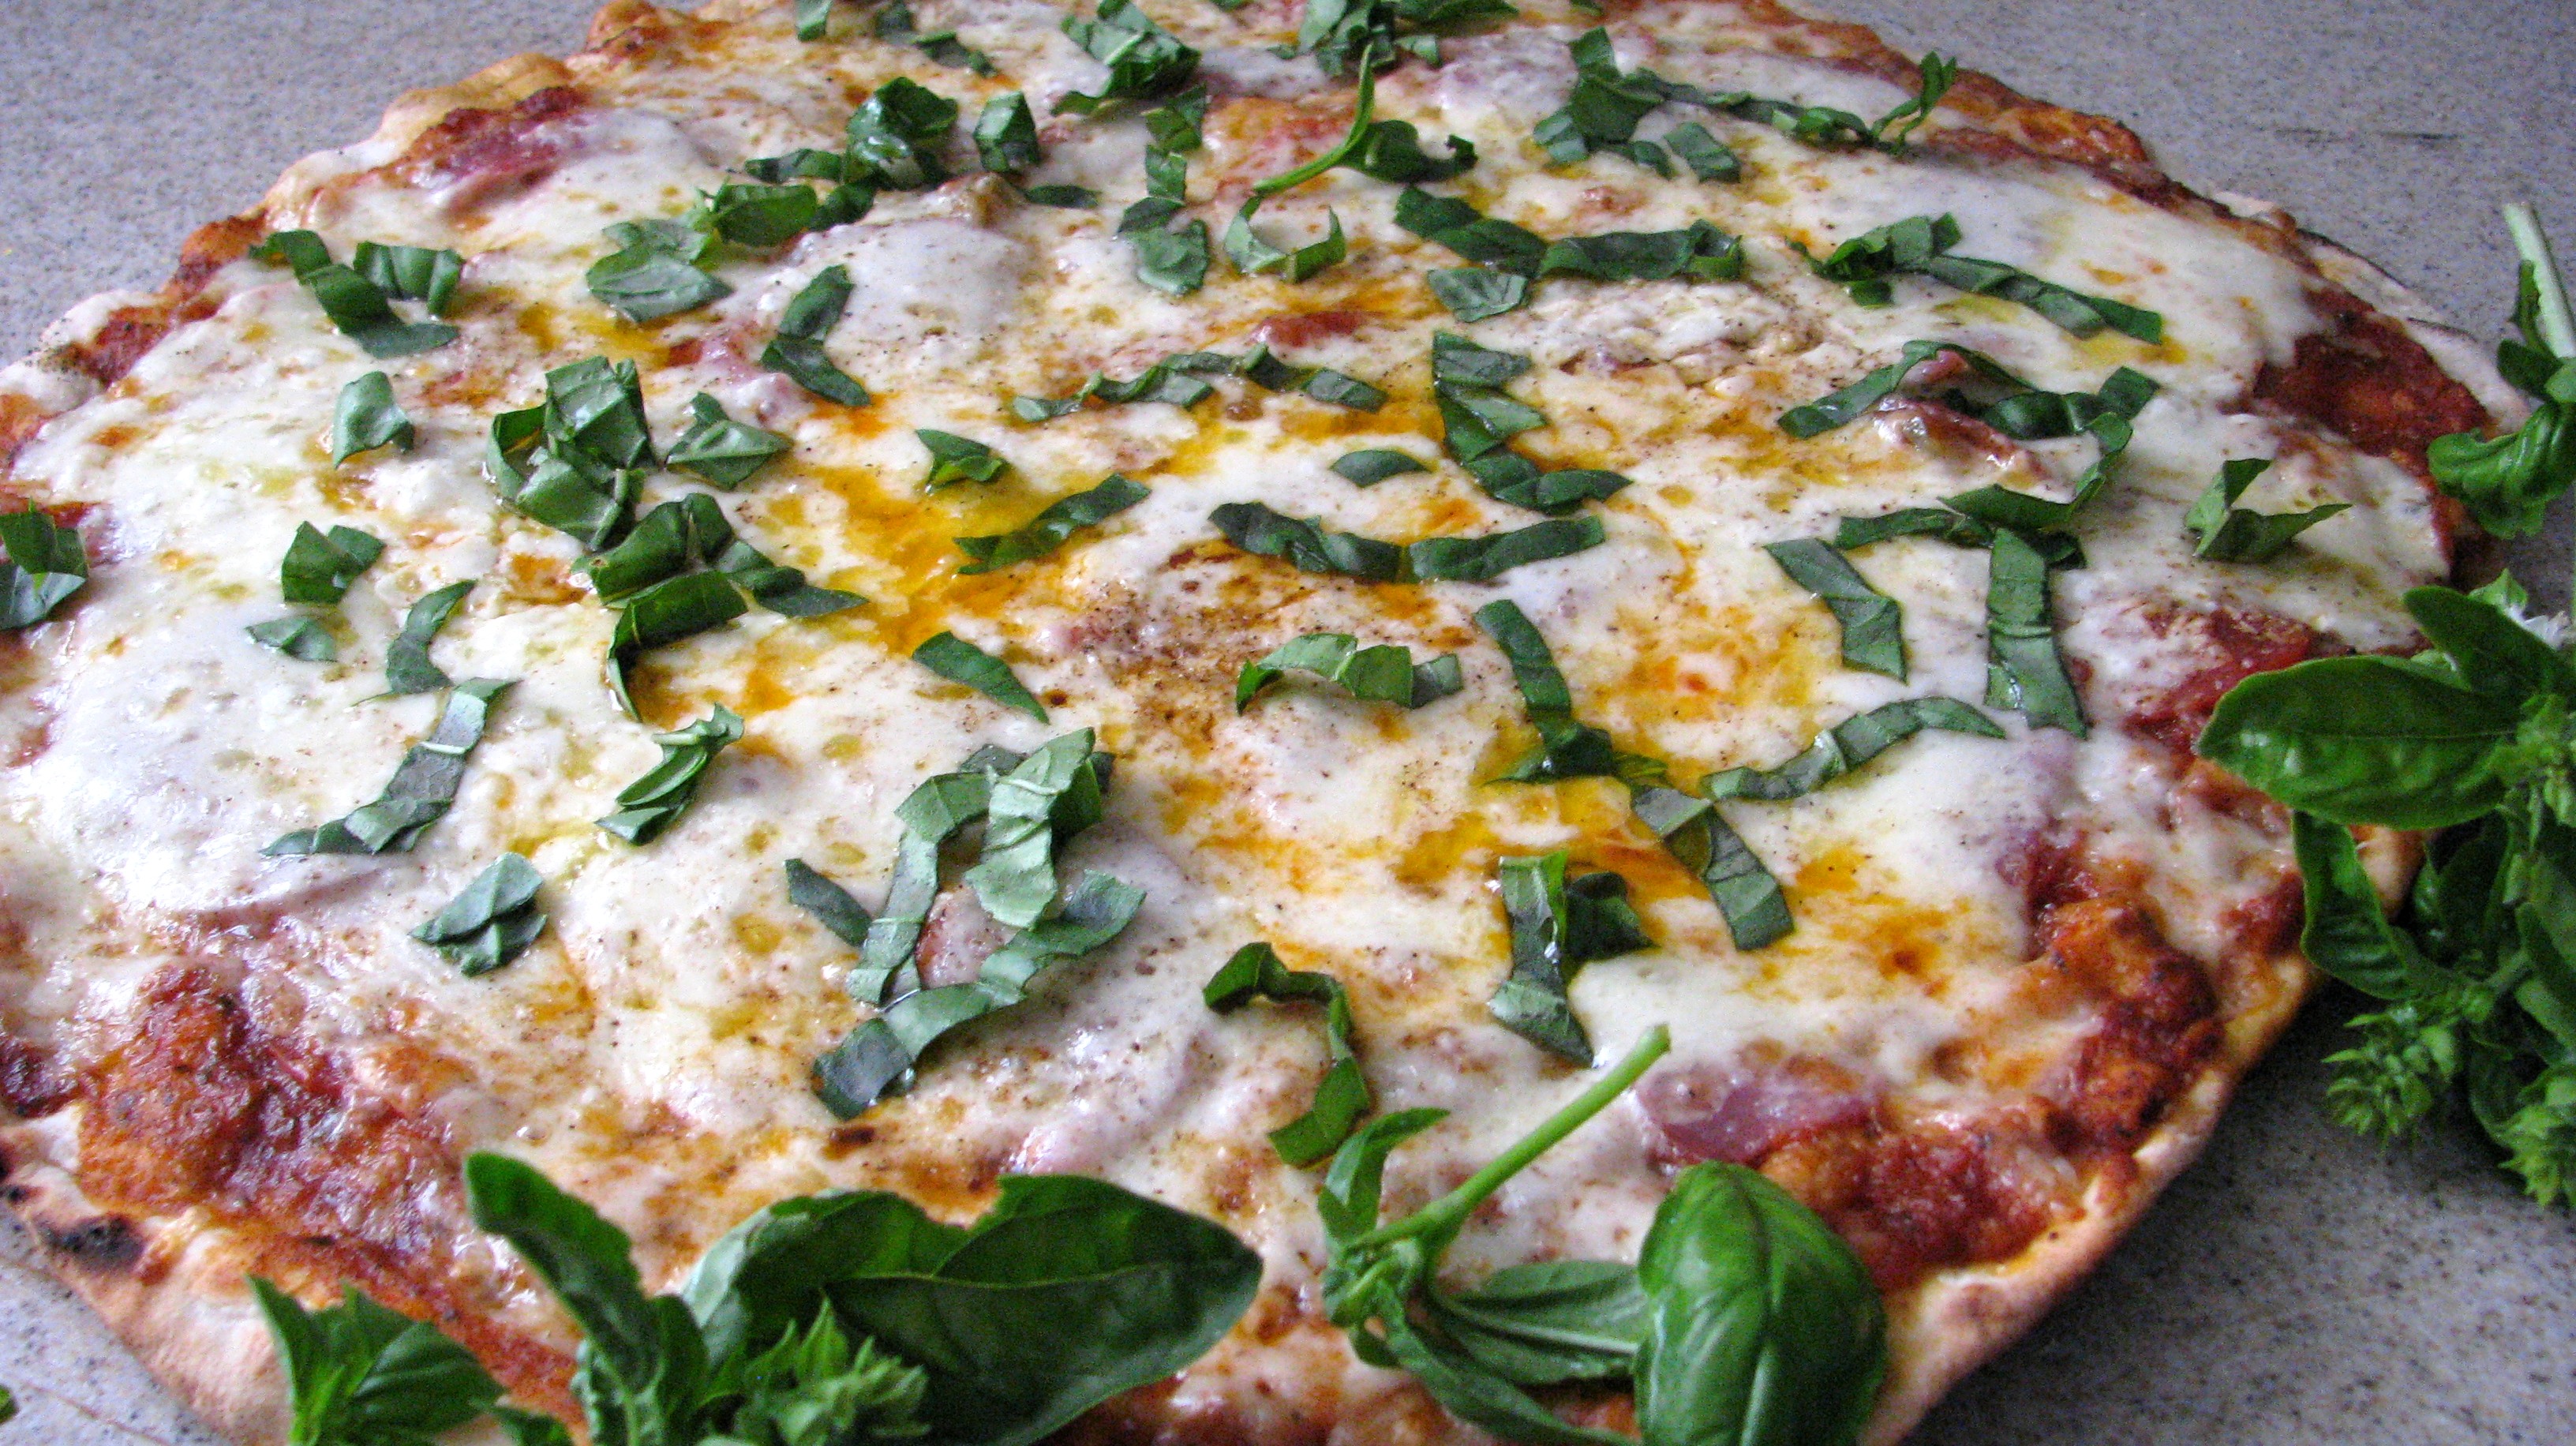 Autentica pizza napoletana (authentic neapolitan pizza)